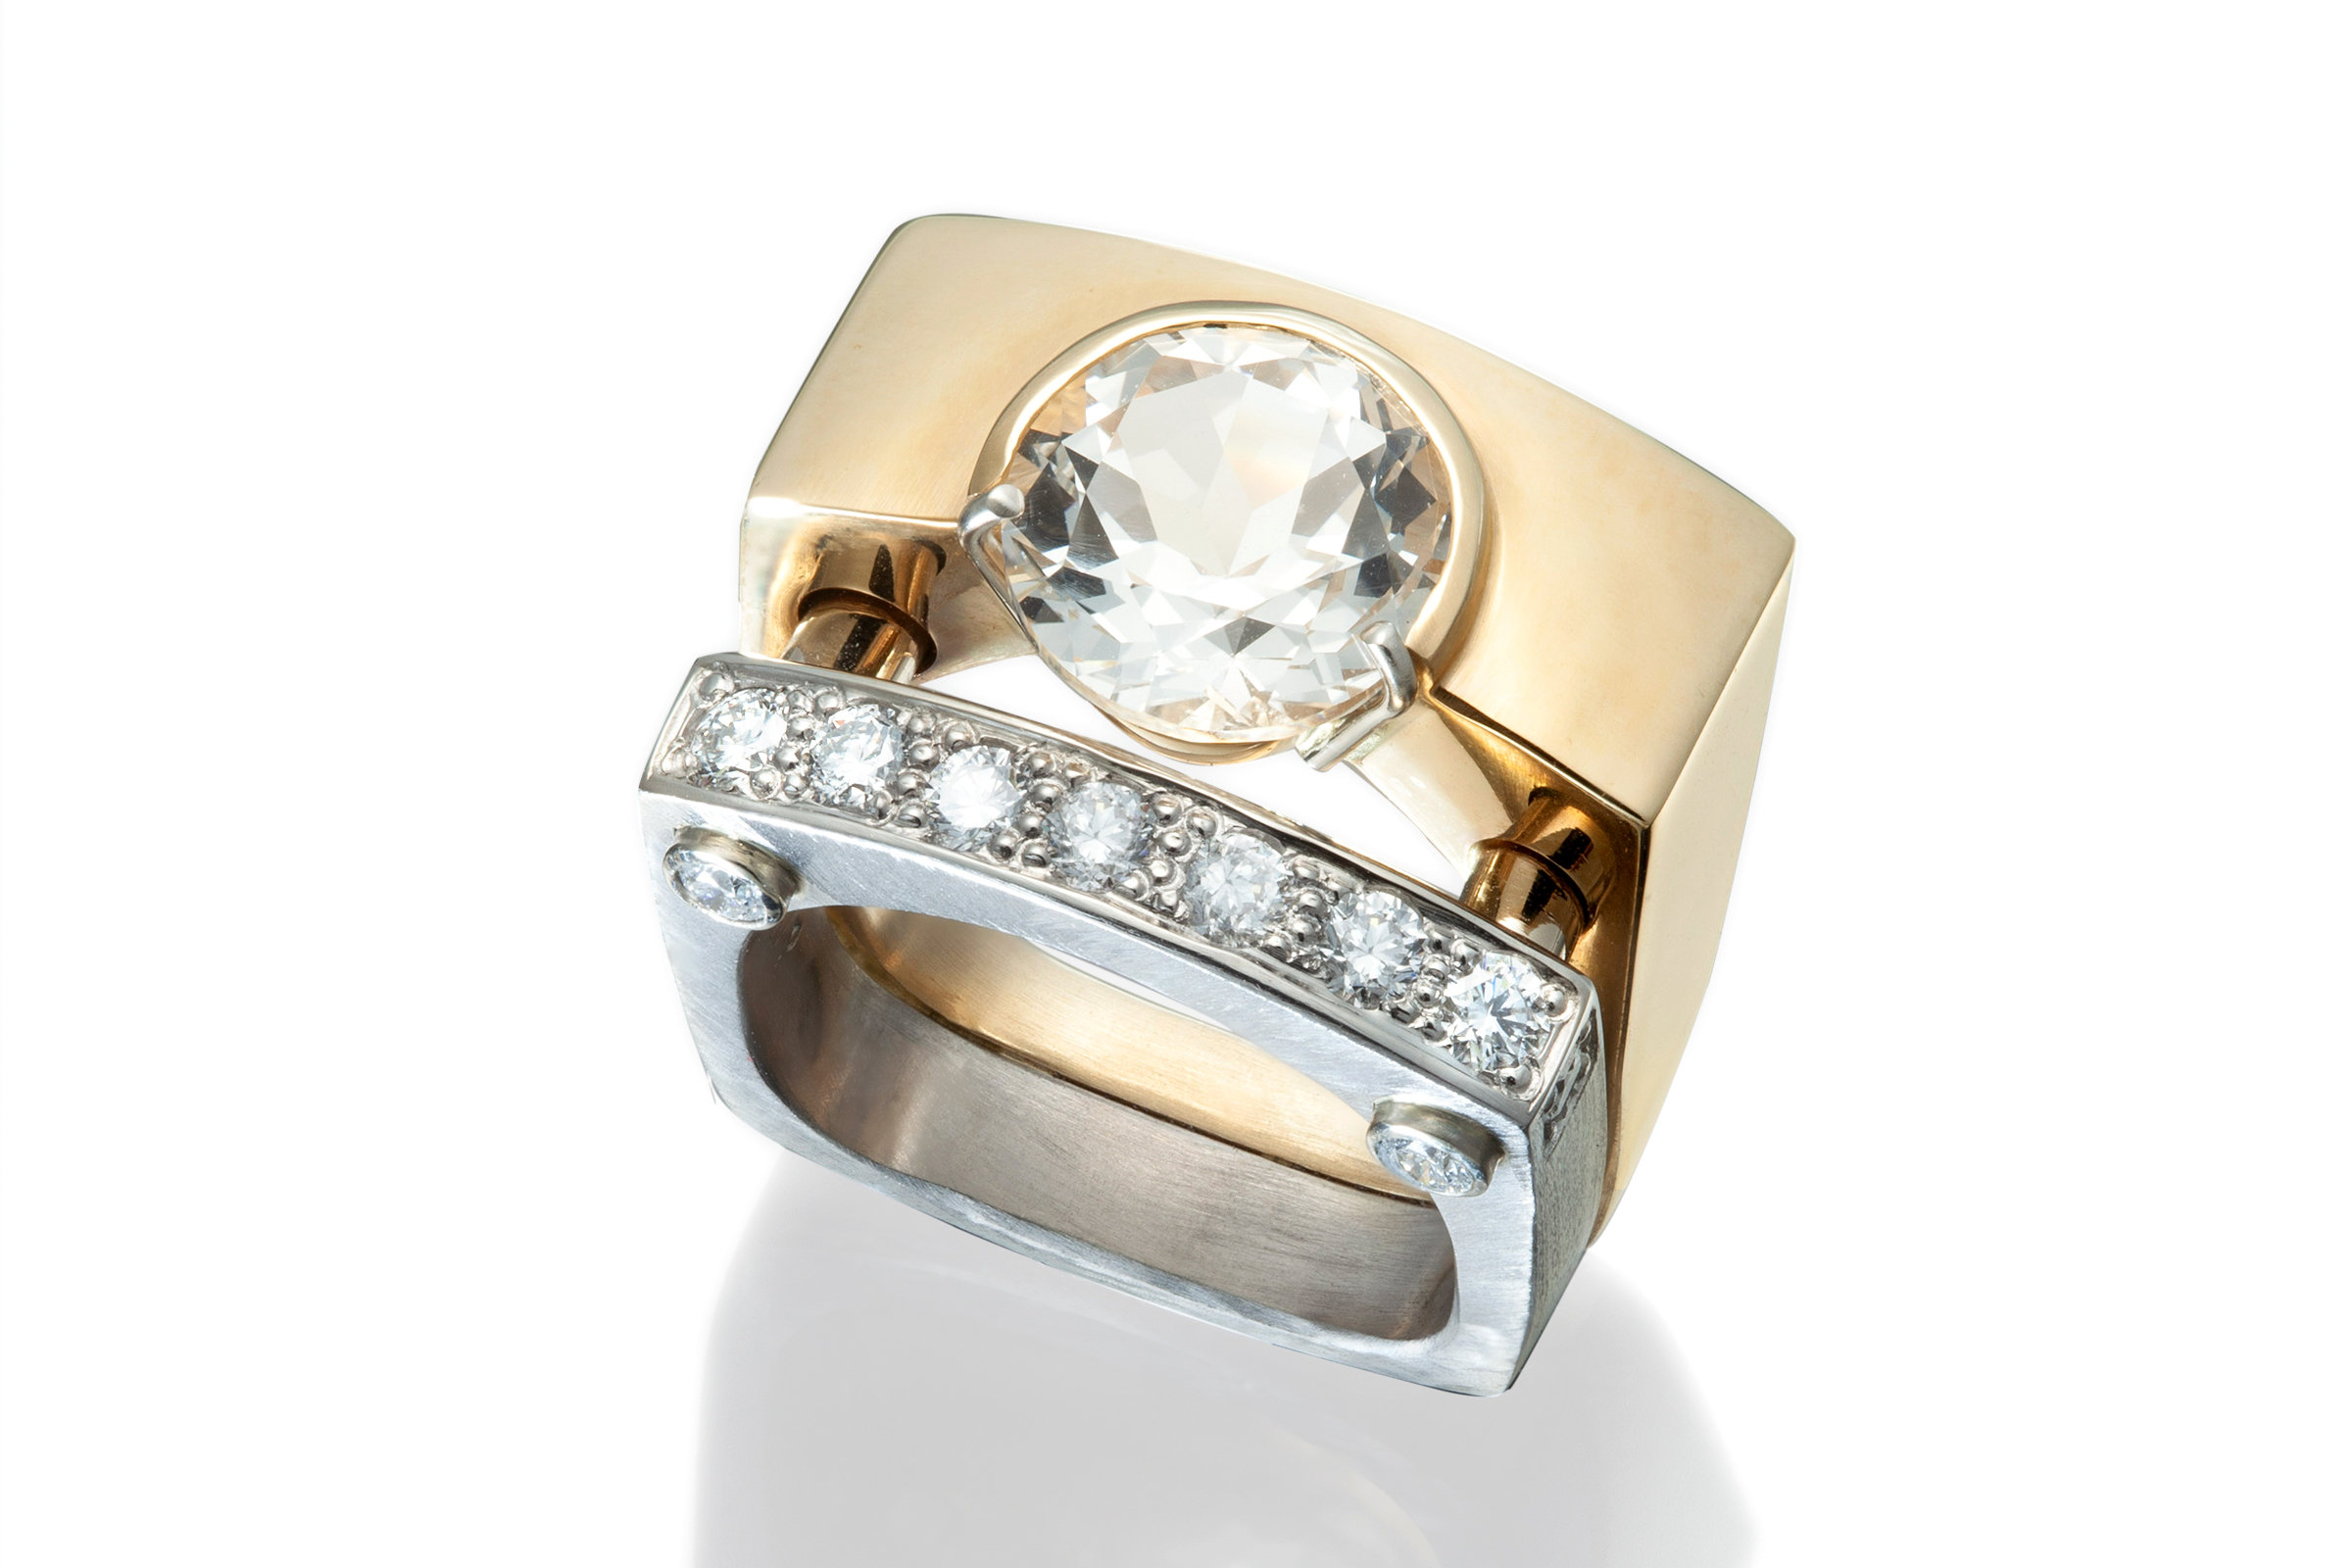 Wide Contemporary Gemstone and Diamond Ring by Leann Feldt (Palladium, Gold  & Stone Ring) | Artful Home